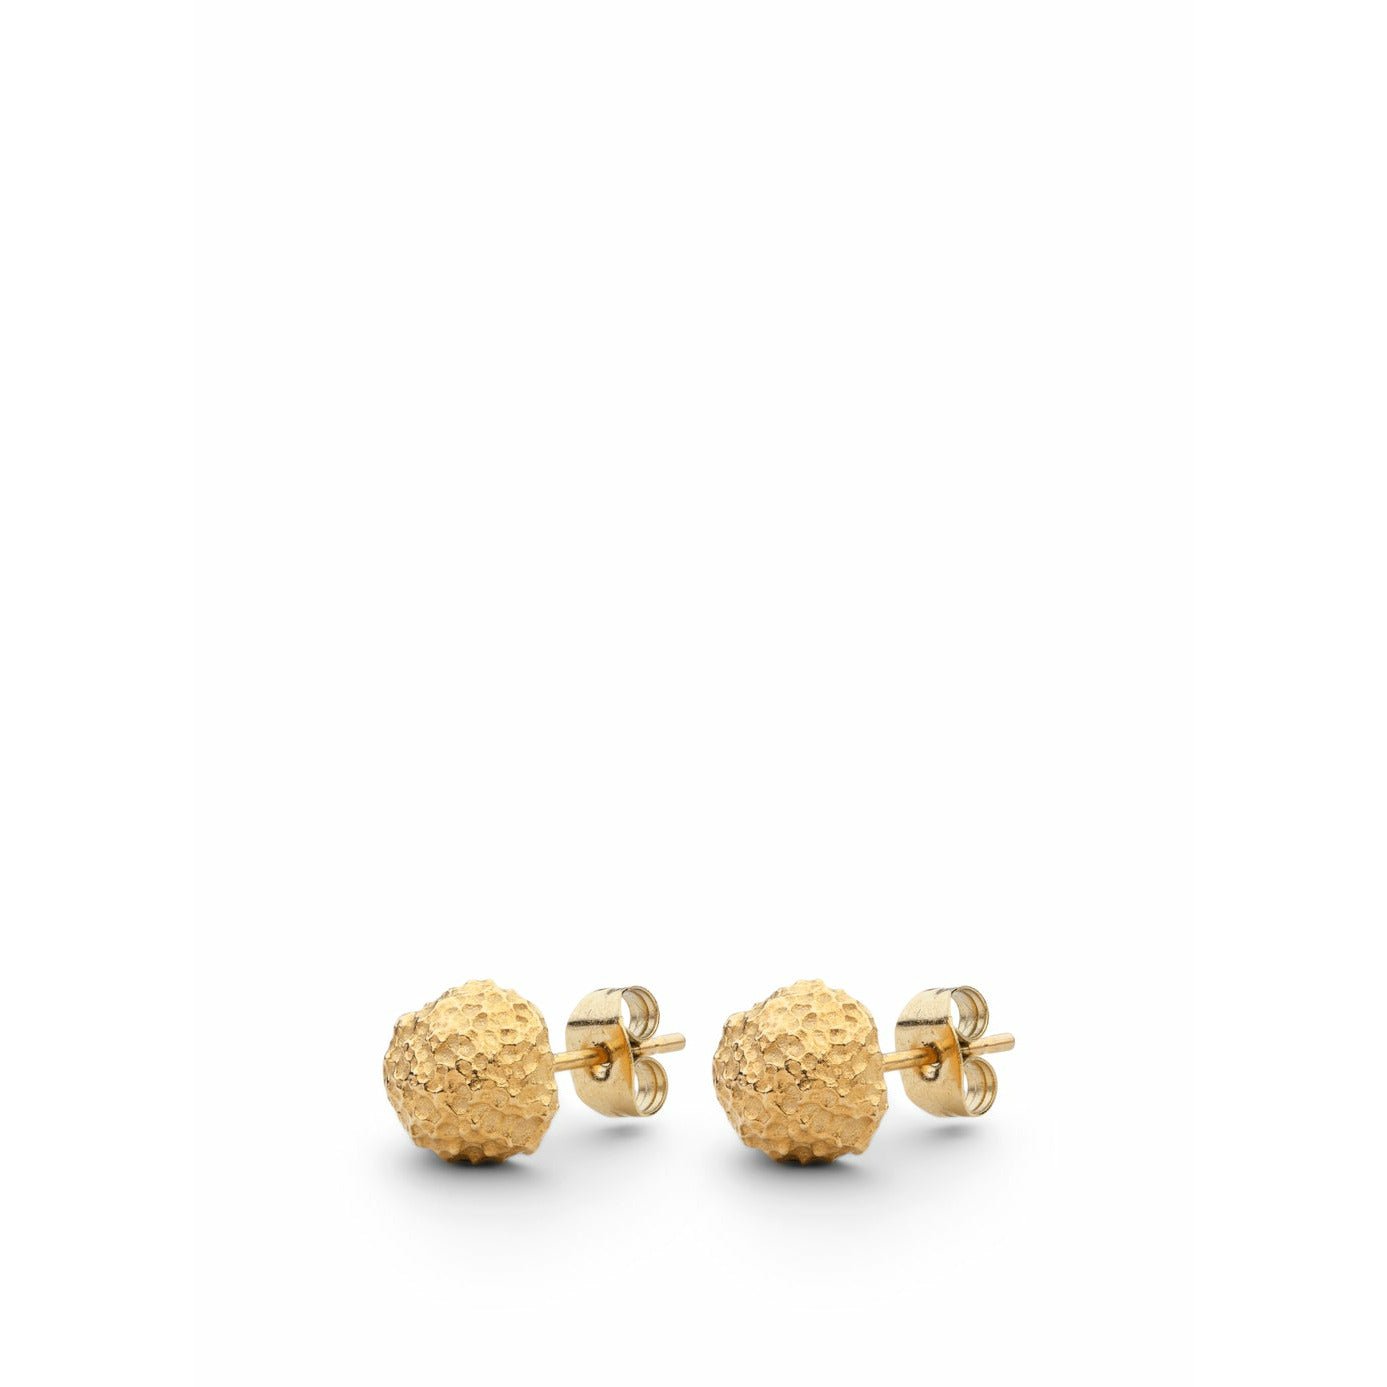 Skultuna Opaque Objects Earrings, 316 L Steel Gold Plated